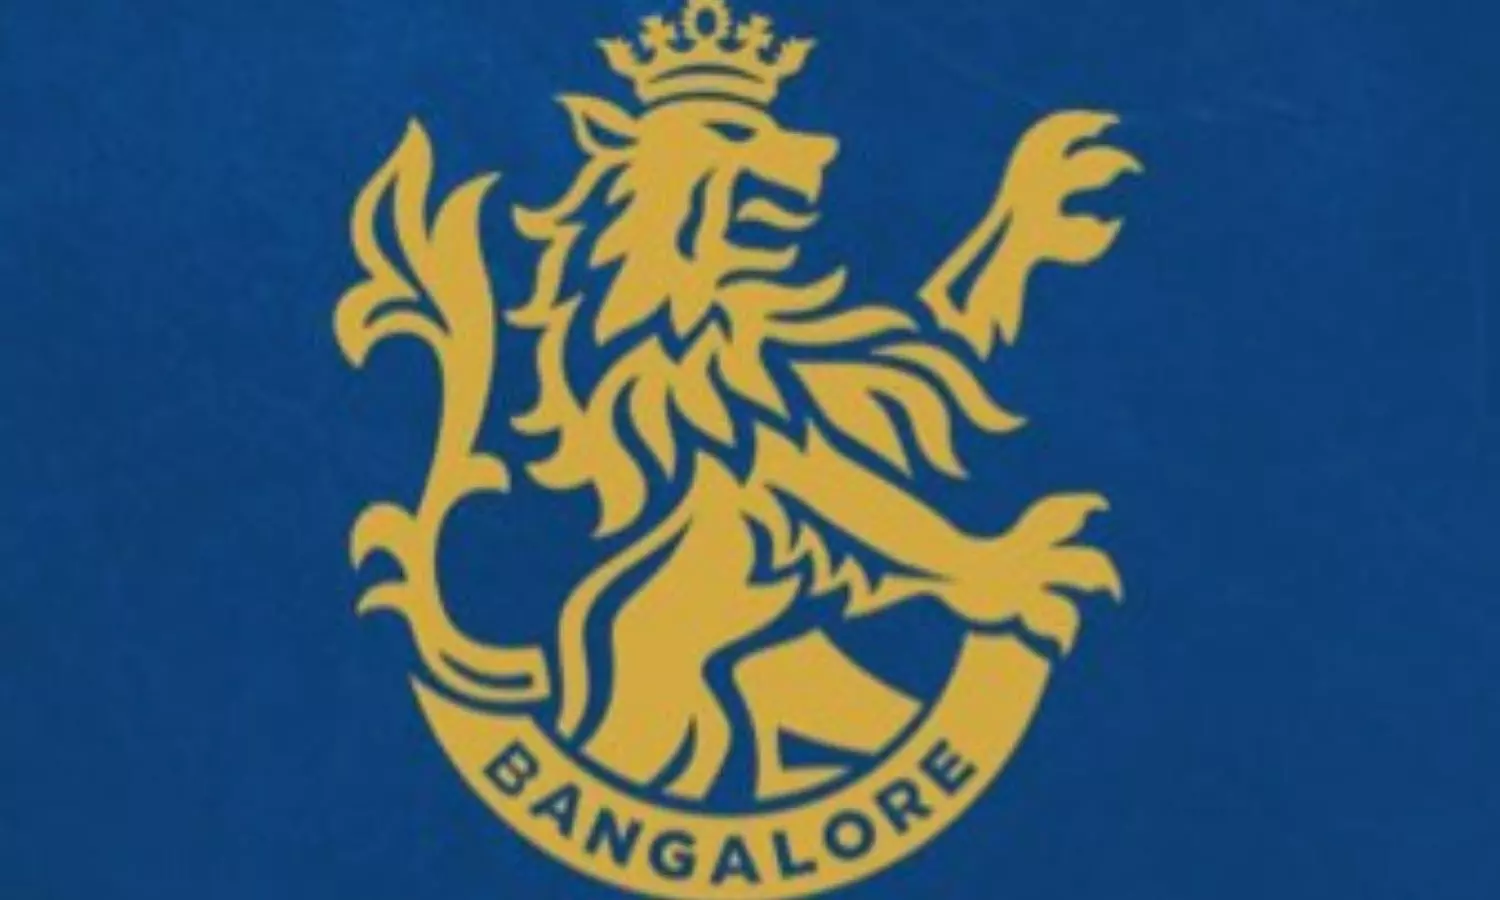 Royal Challengers Bangalore (@RCBTweets) / X